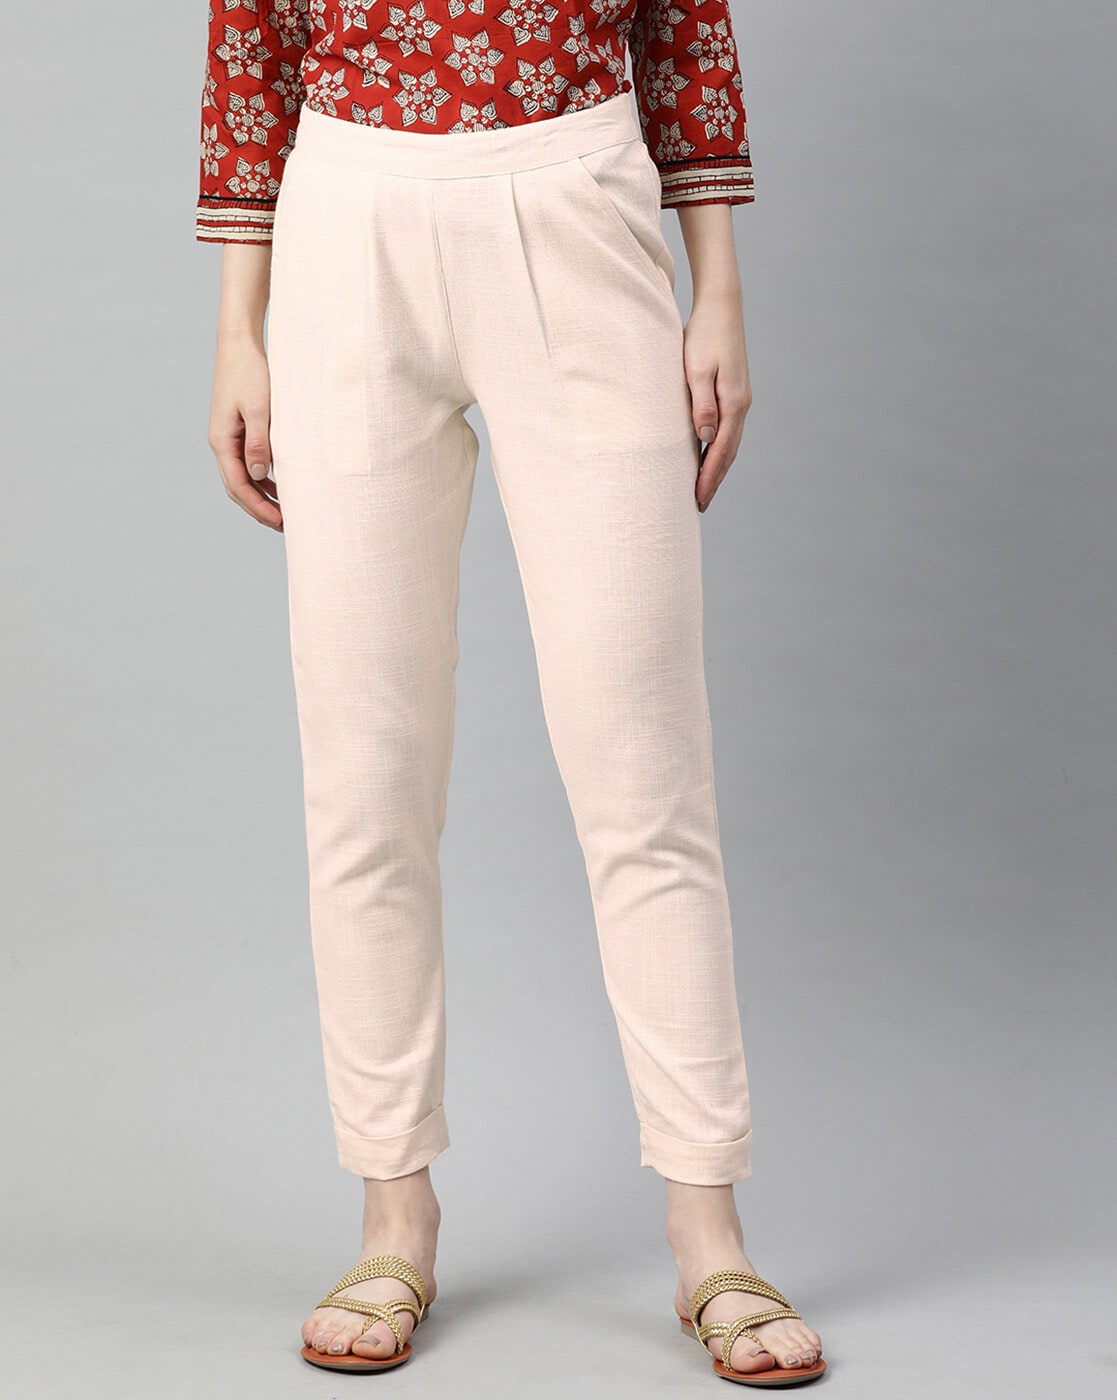 Buy Neelo Kurti Regular Fit Cotton Trouser Pants for  Women(Green-Beige003-S) at Amazon.in